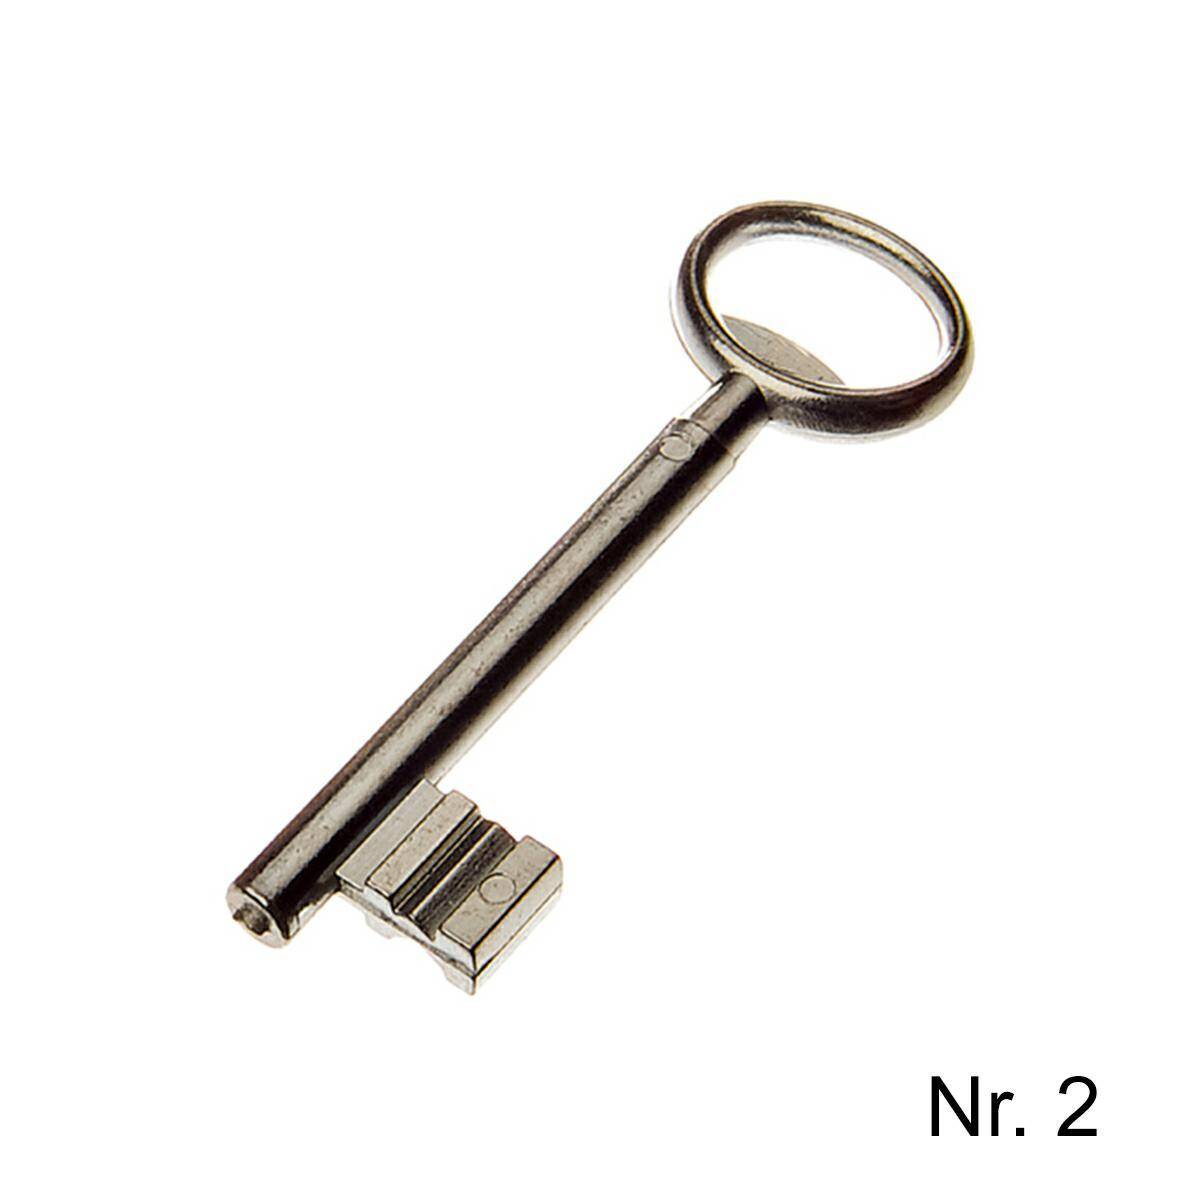 Cast key Jania for the lock - No. 2